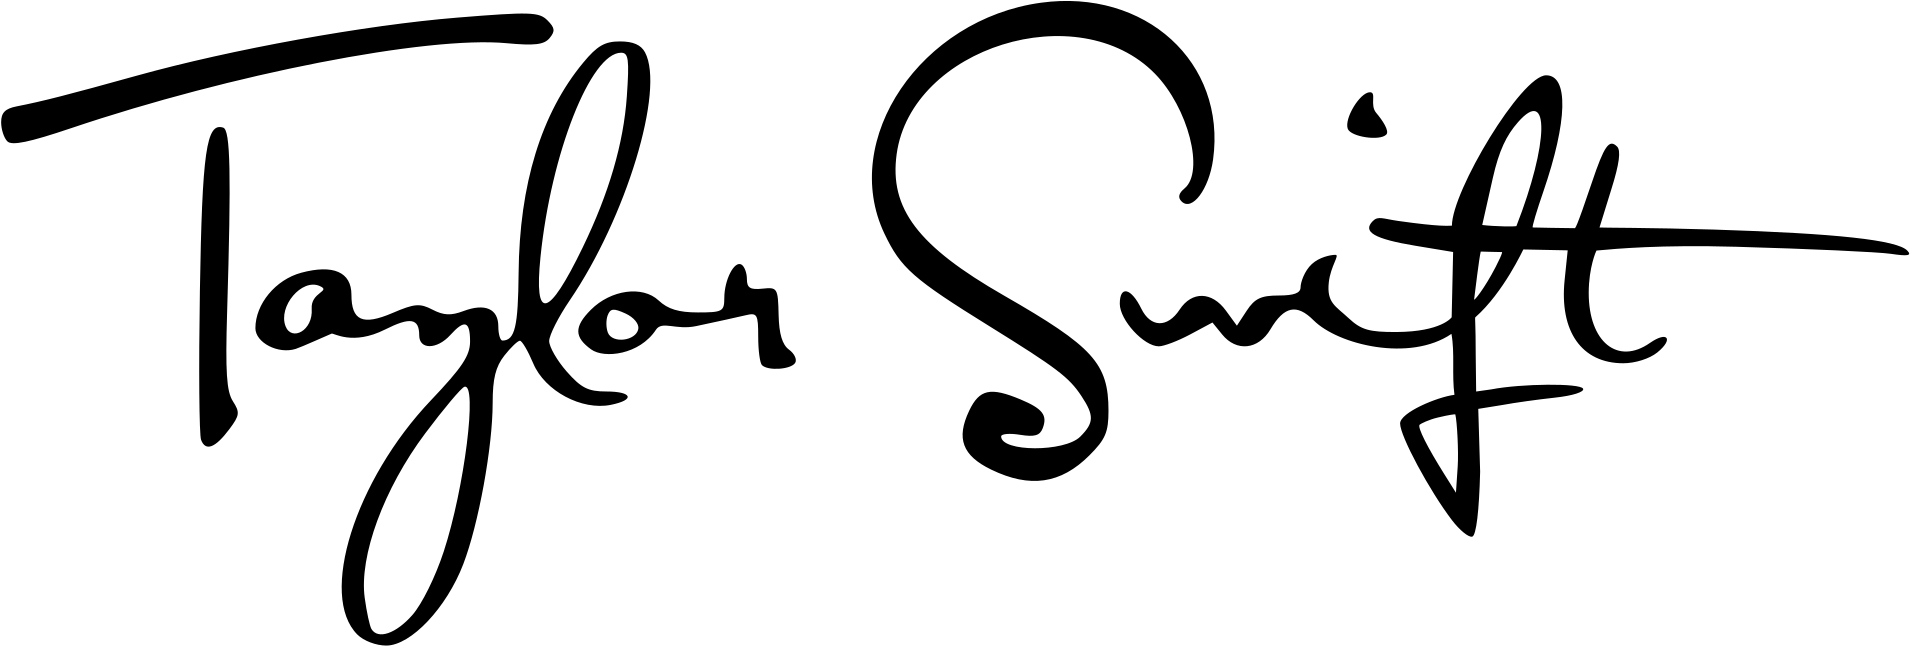 Swift Logo PNG - 178622